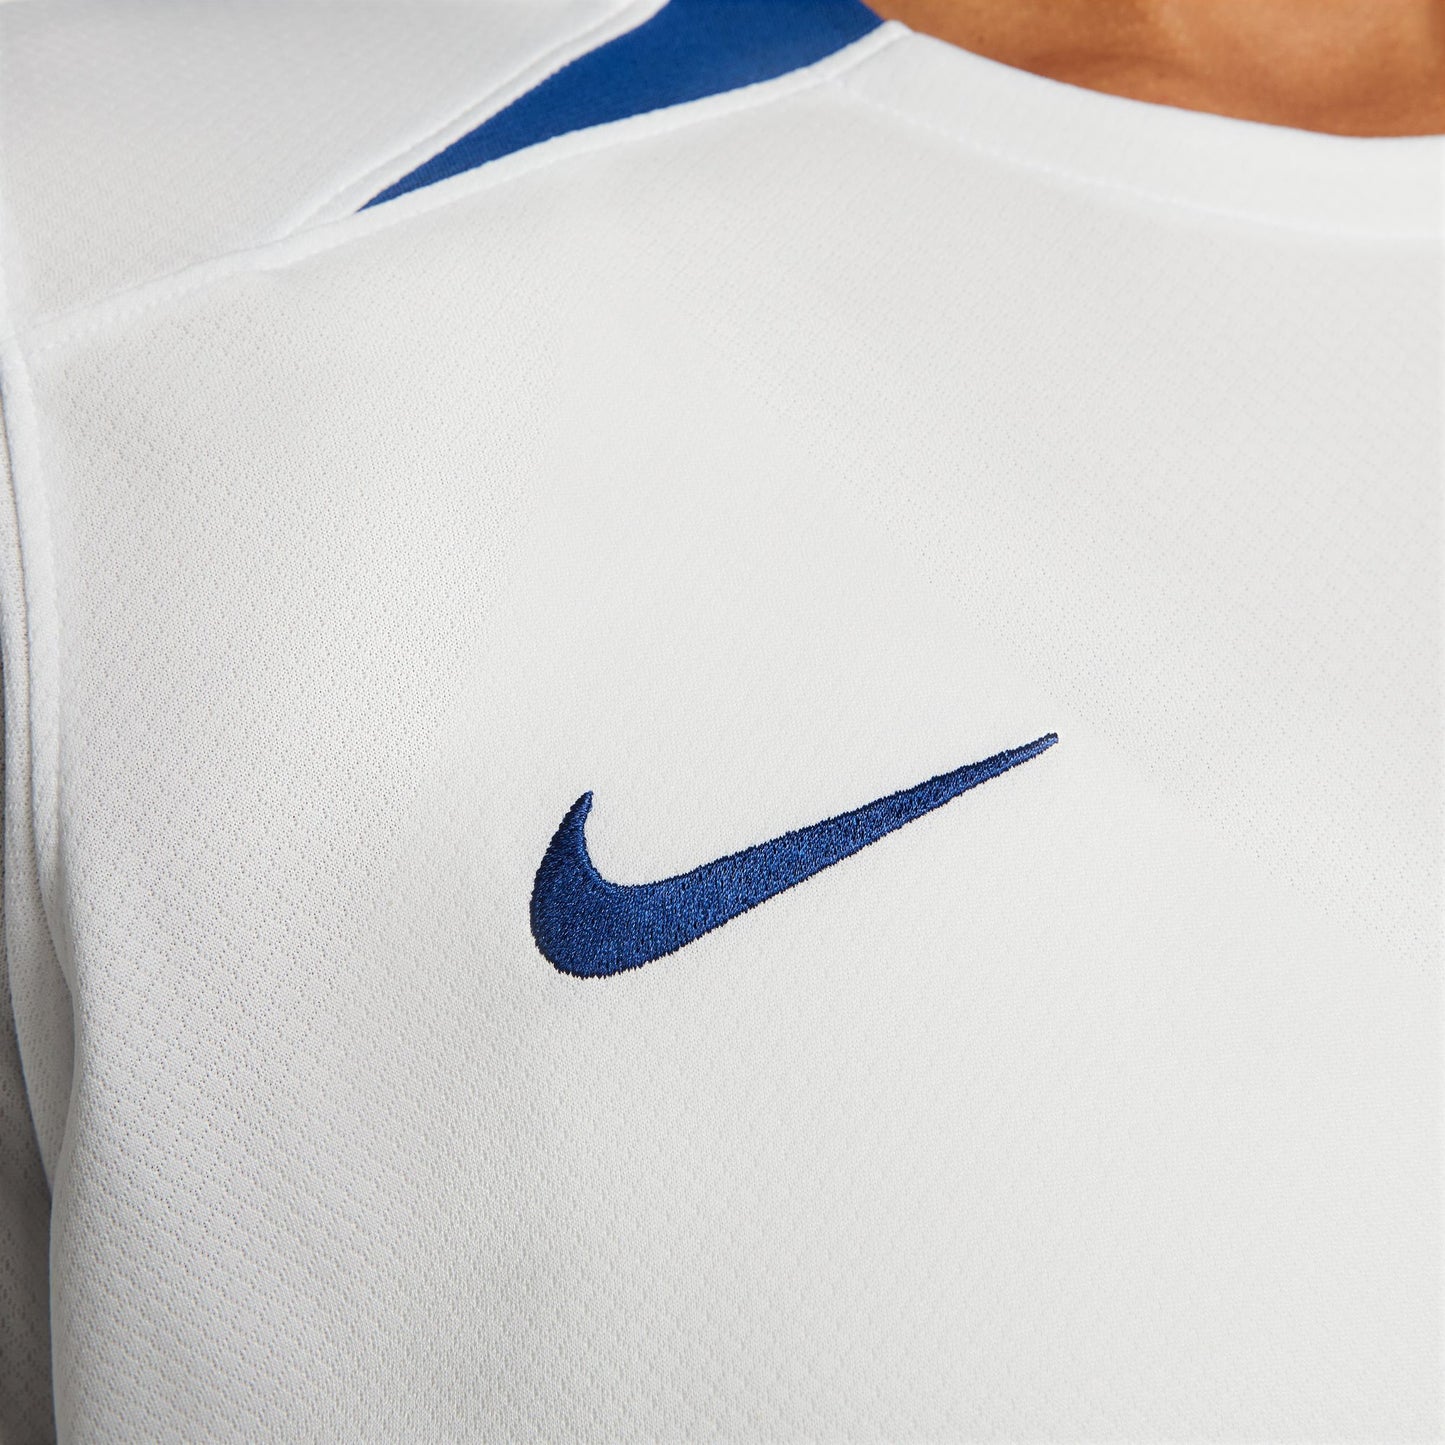 Camiseta Nike Stadium de corte curvo de local de las Lionesses de Inglaterra 2023